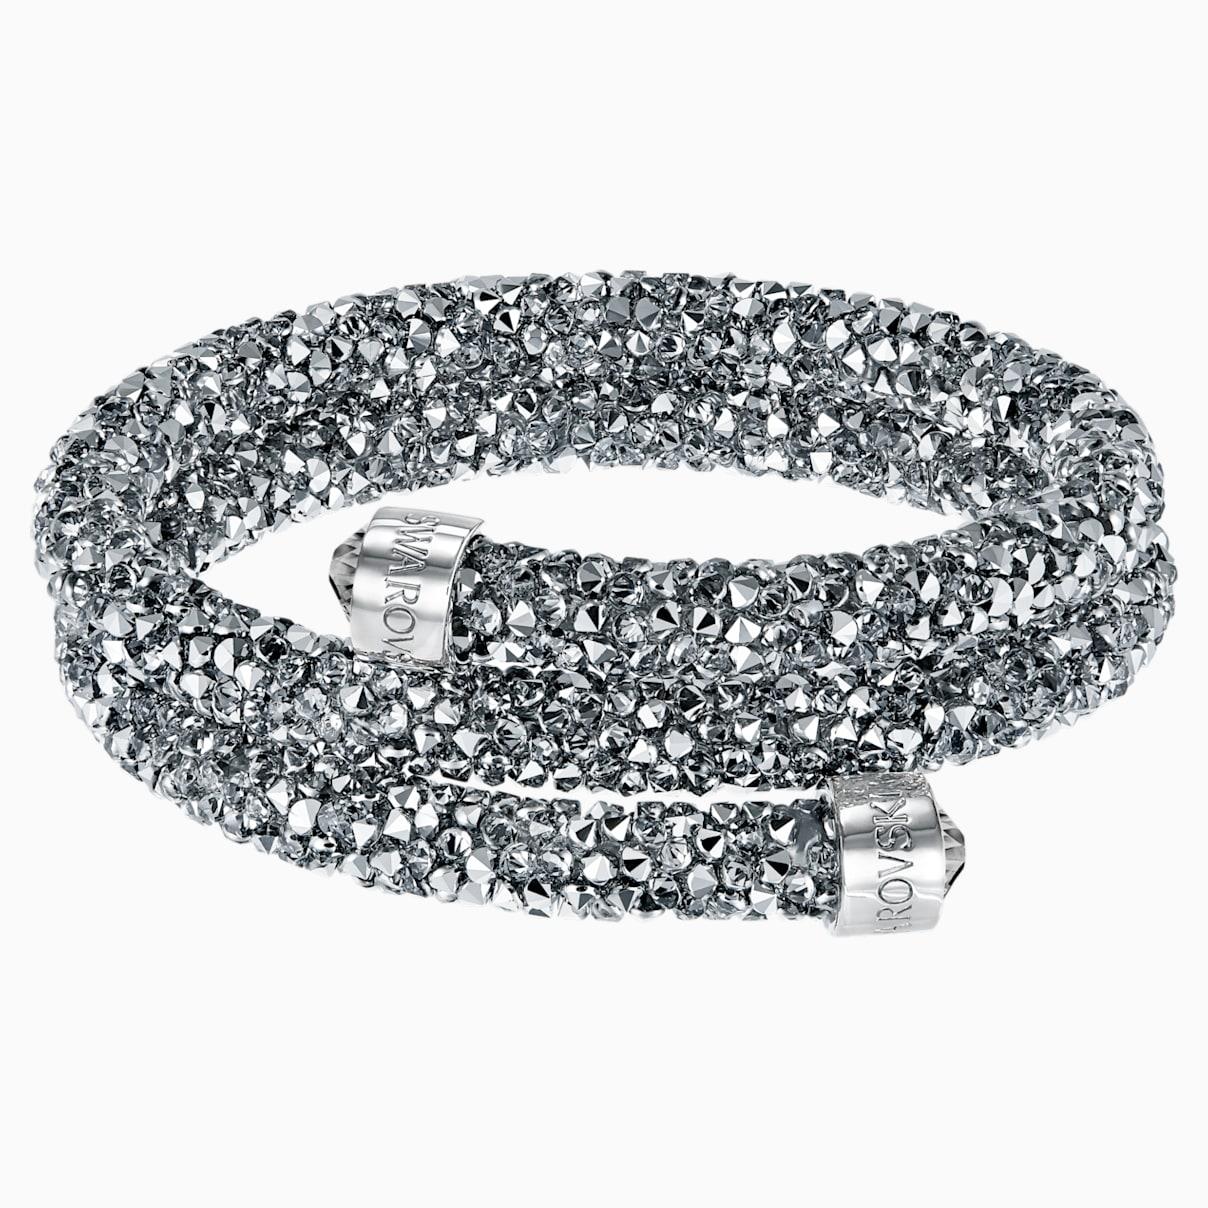 Swarovski Crystaldust Bangle Bracelet in Silver (Gray) - Lyst